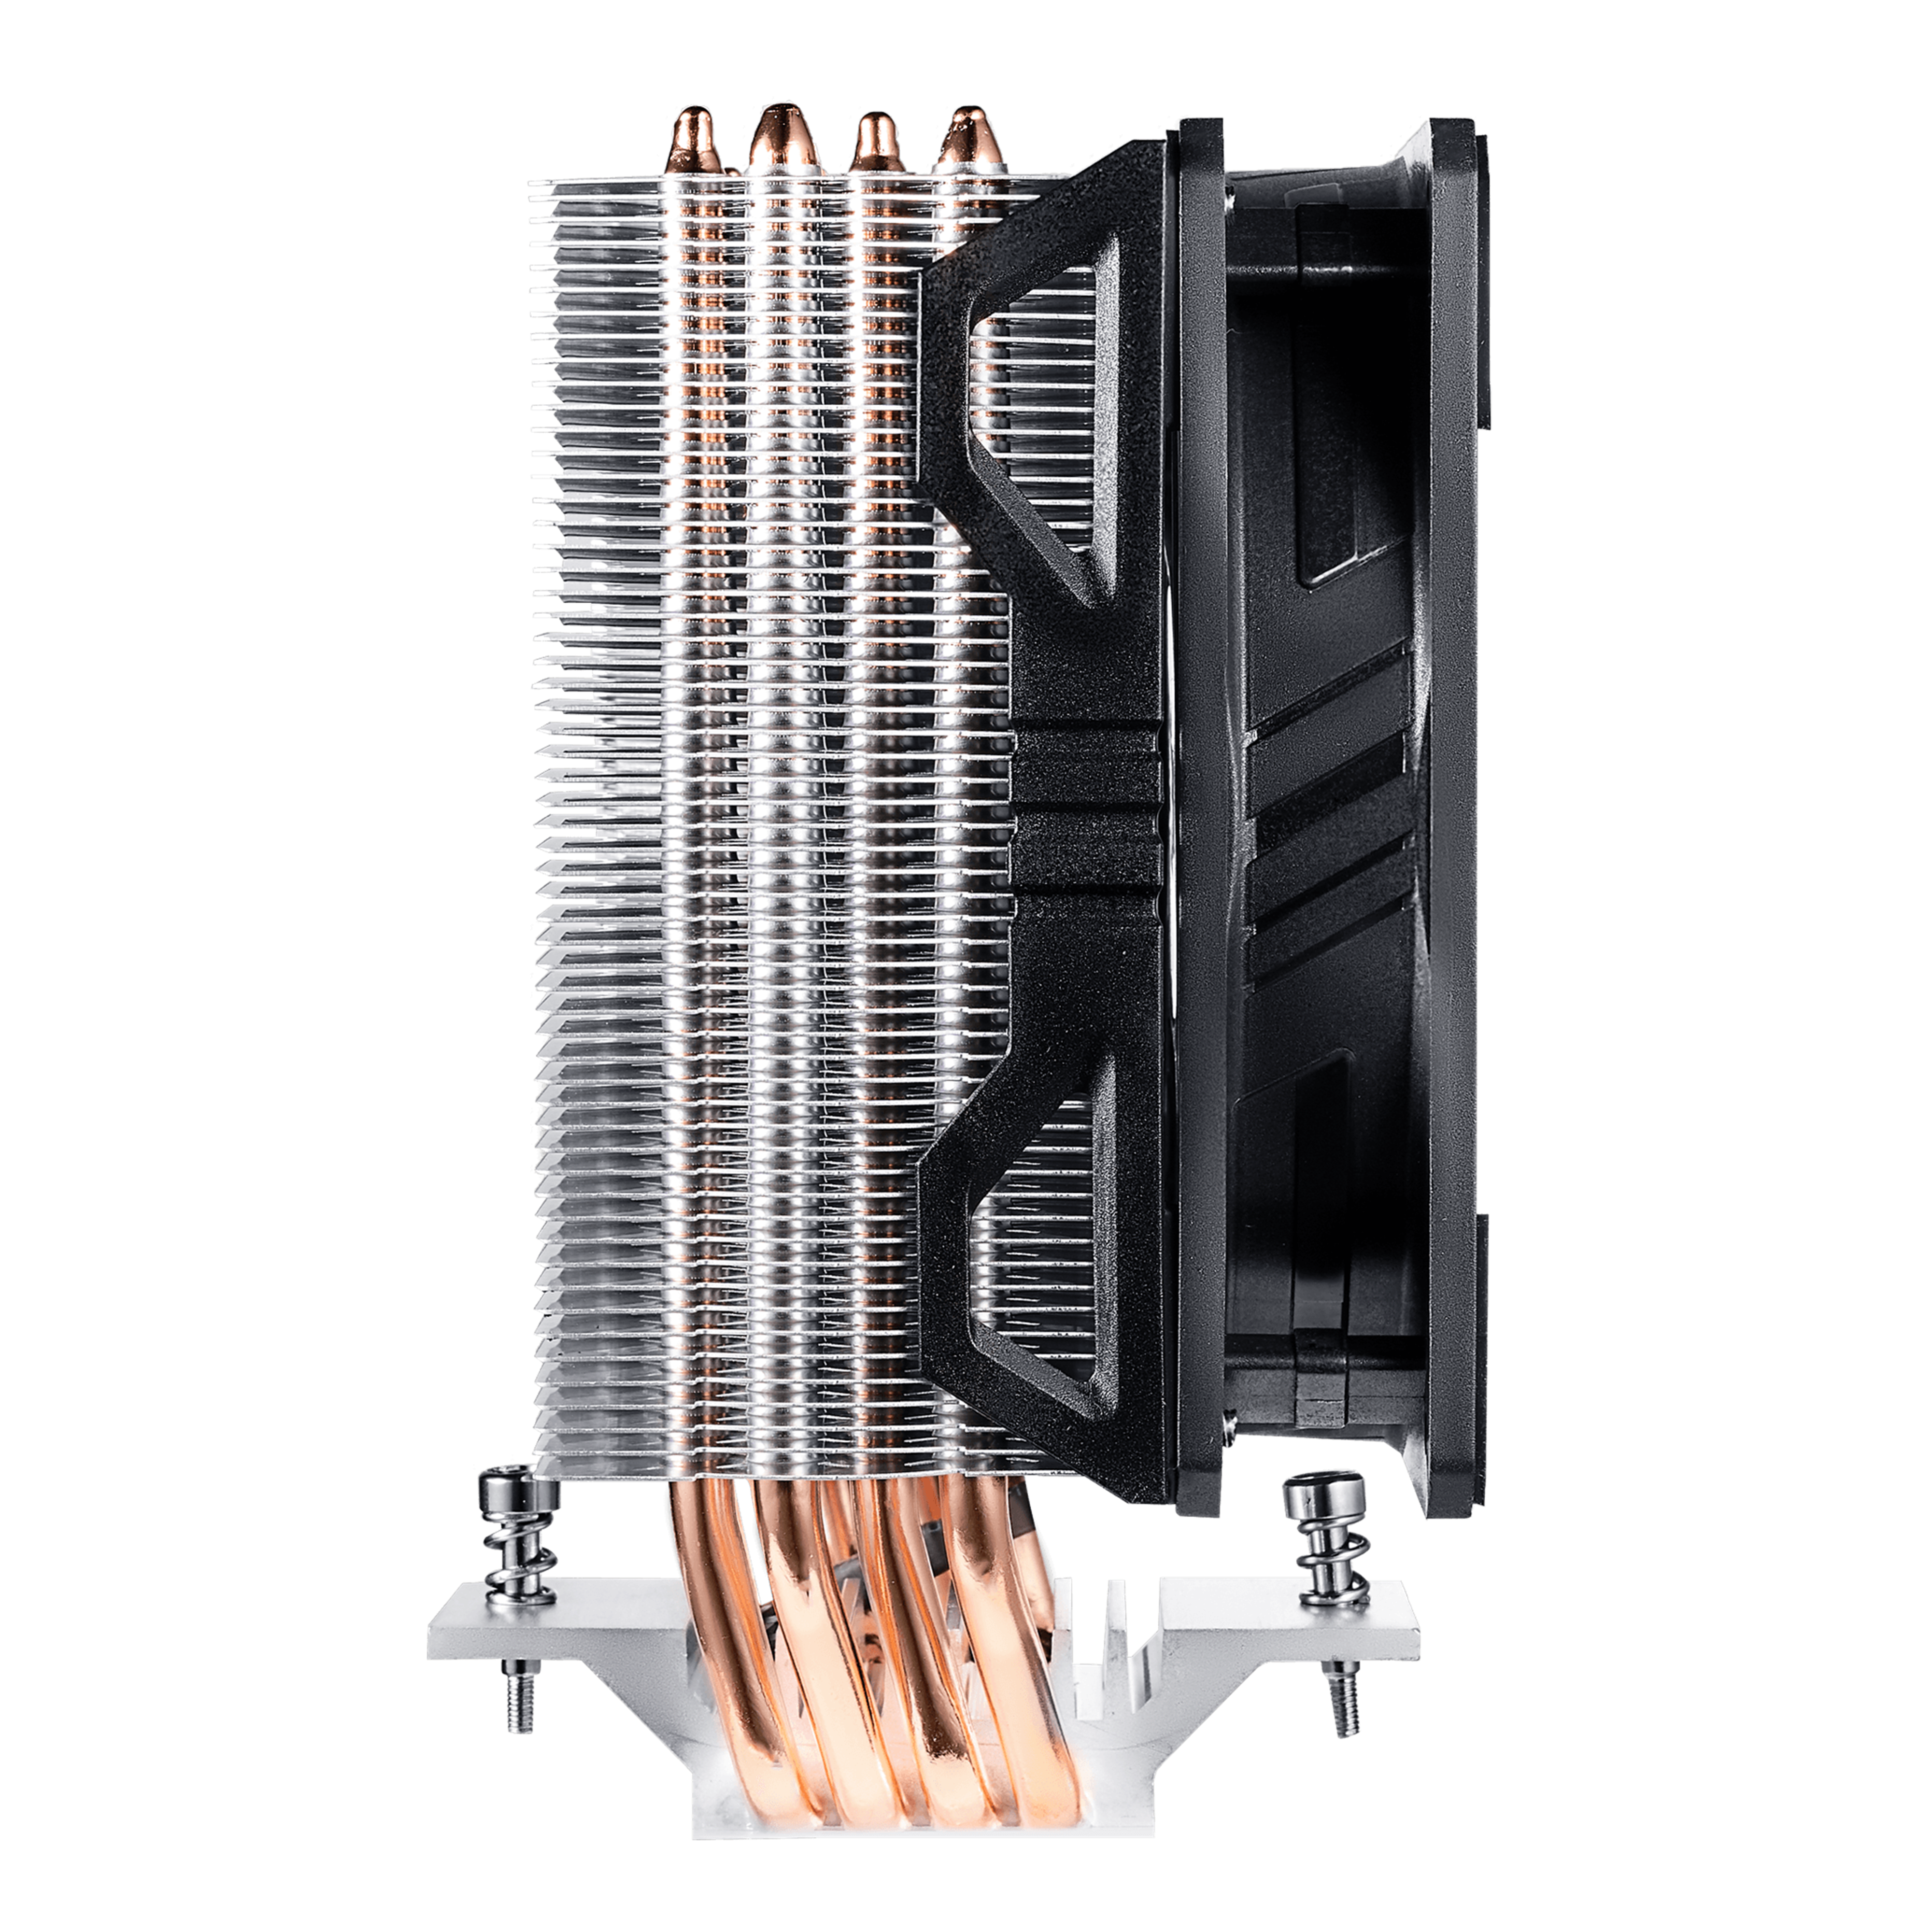 Cooler Master Hyper 212 Evo CPU Cooler (RR-212E-20PK-R2), 120mm PWM Fan,  Aluminum Fins, 4 Copper Direct Contact Heat Pipes for AMD Ryzen/Intel